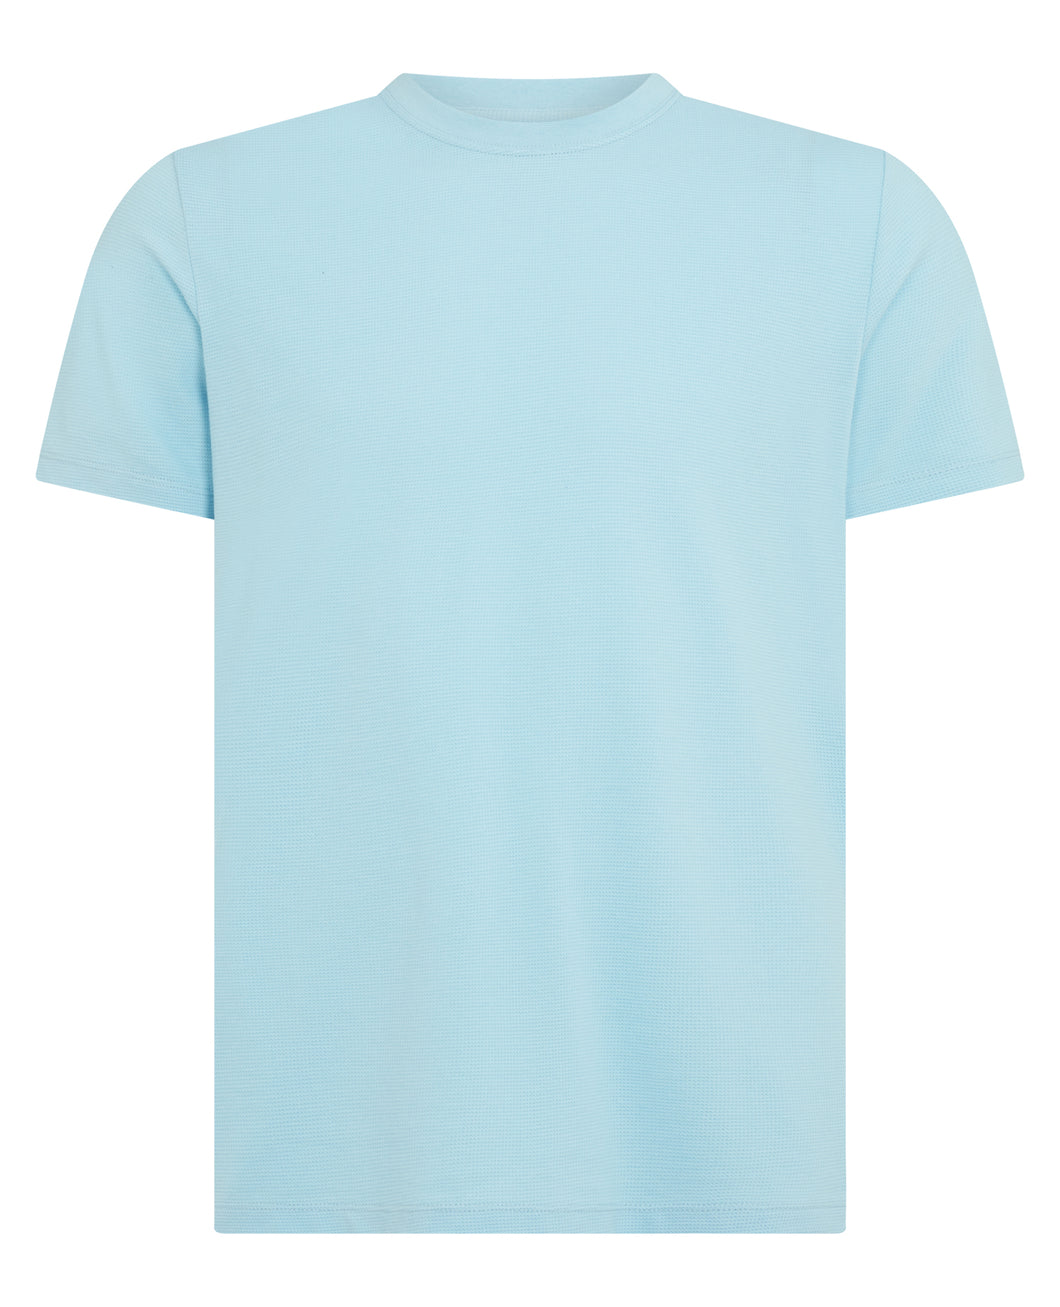 REMUS UOMO T Shirt in Light Blue 133-58786